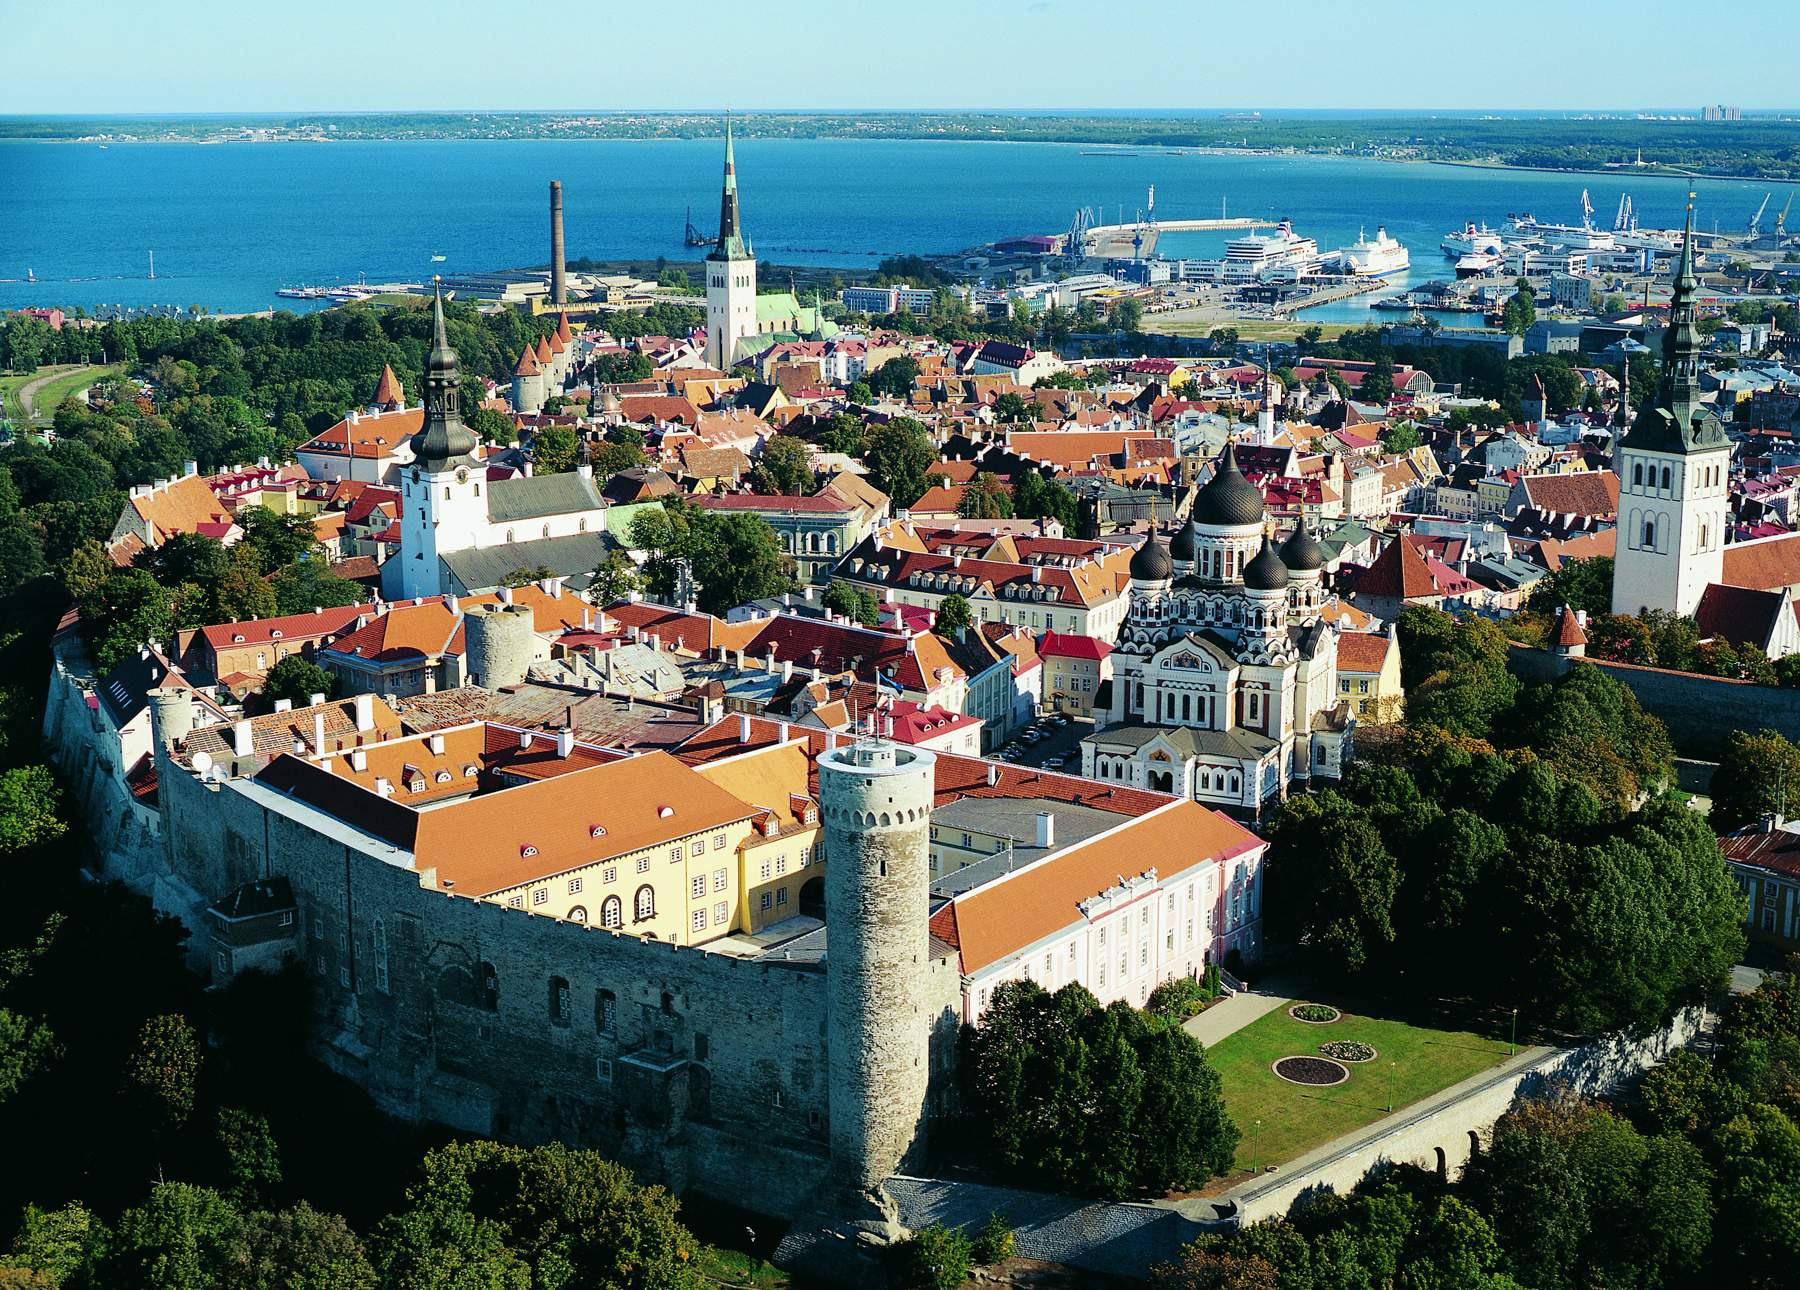 Rägavere, Estonia. City travel guide – Attractions, Activities, Local cuisine